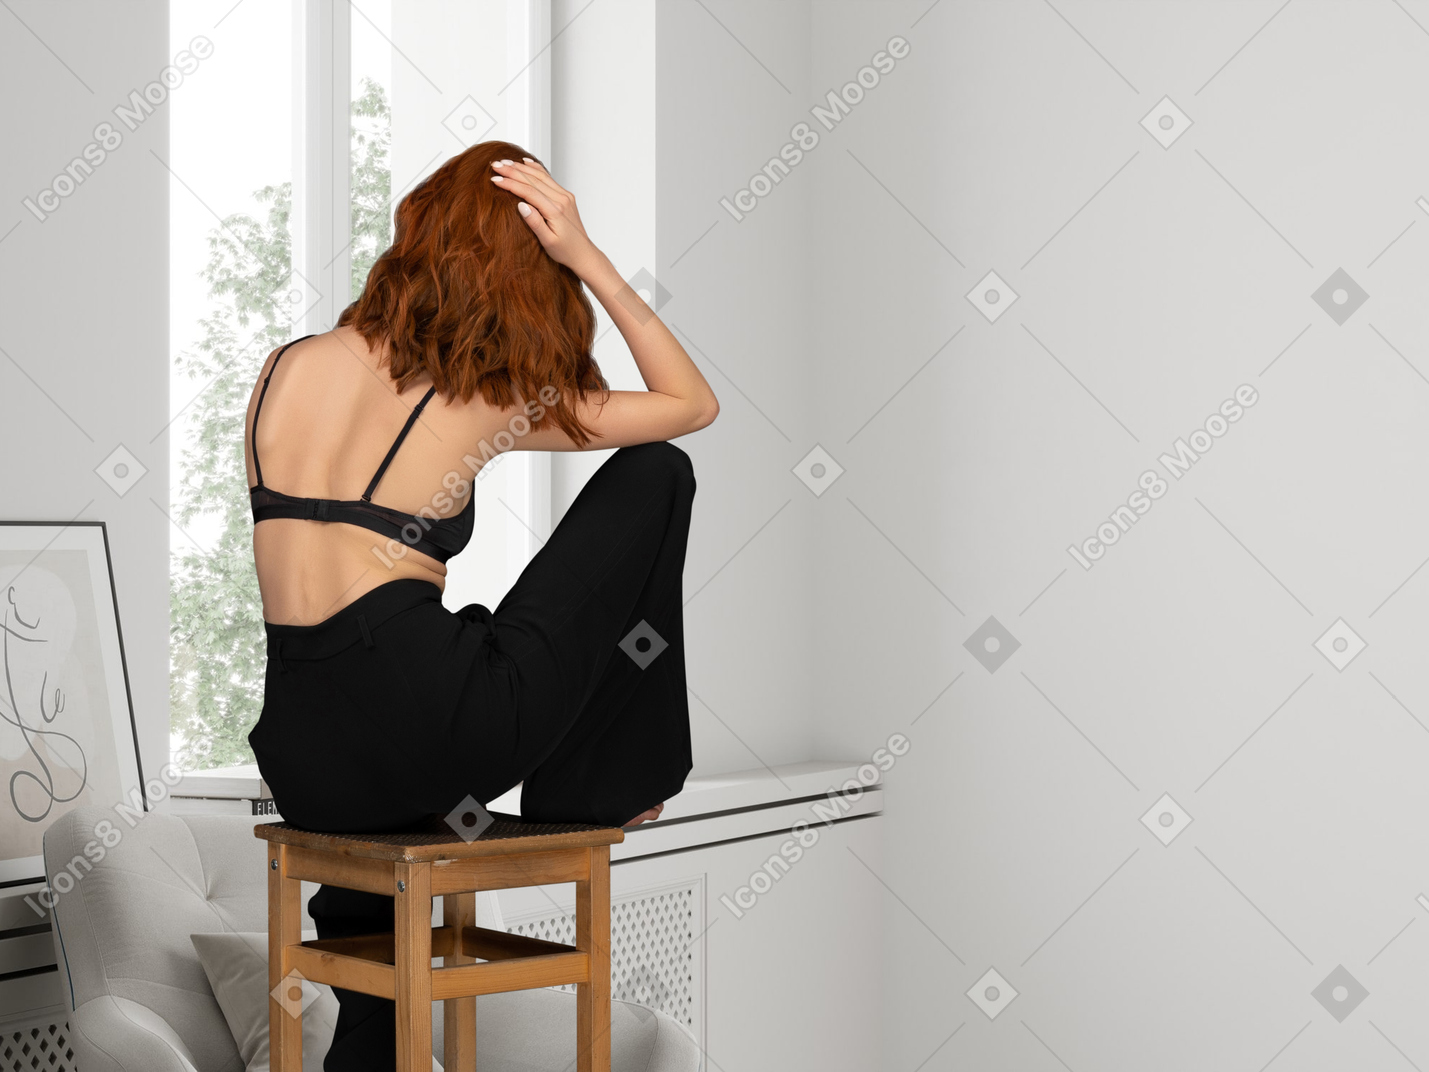 Una donna seduta su una sedia in una stanza